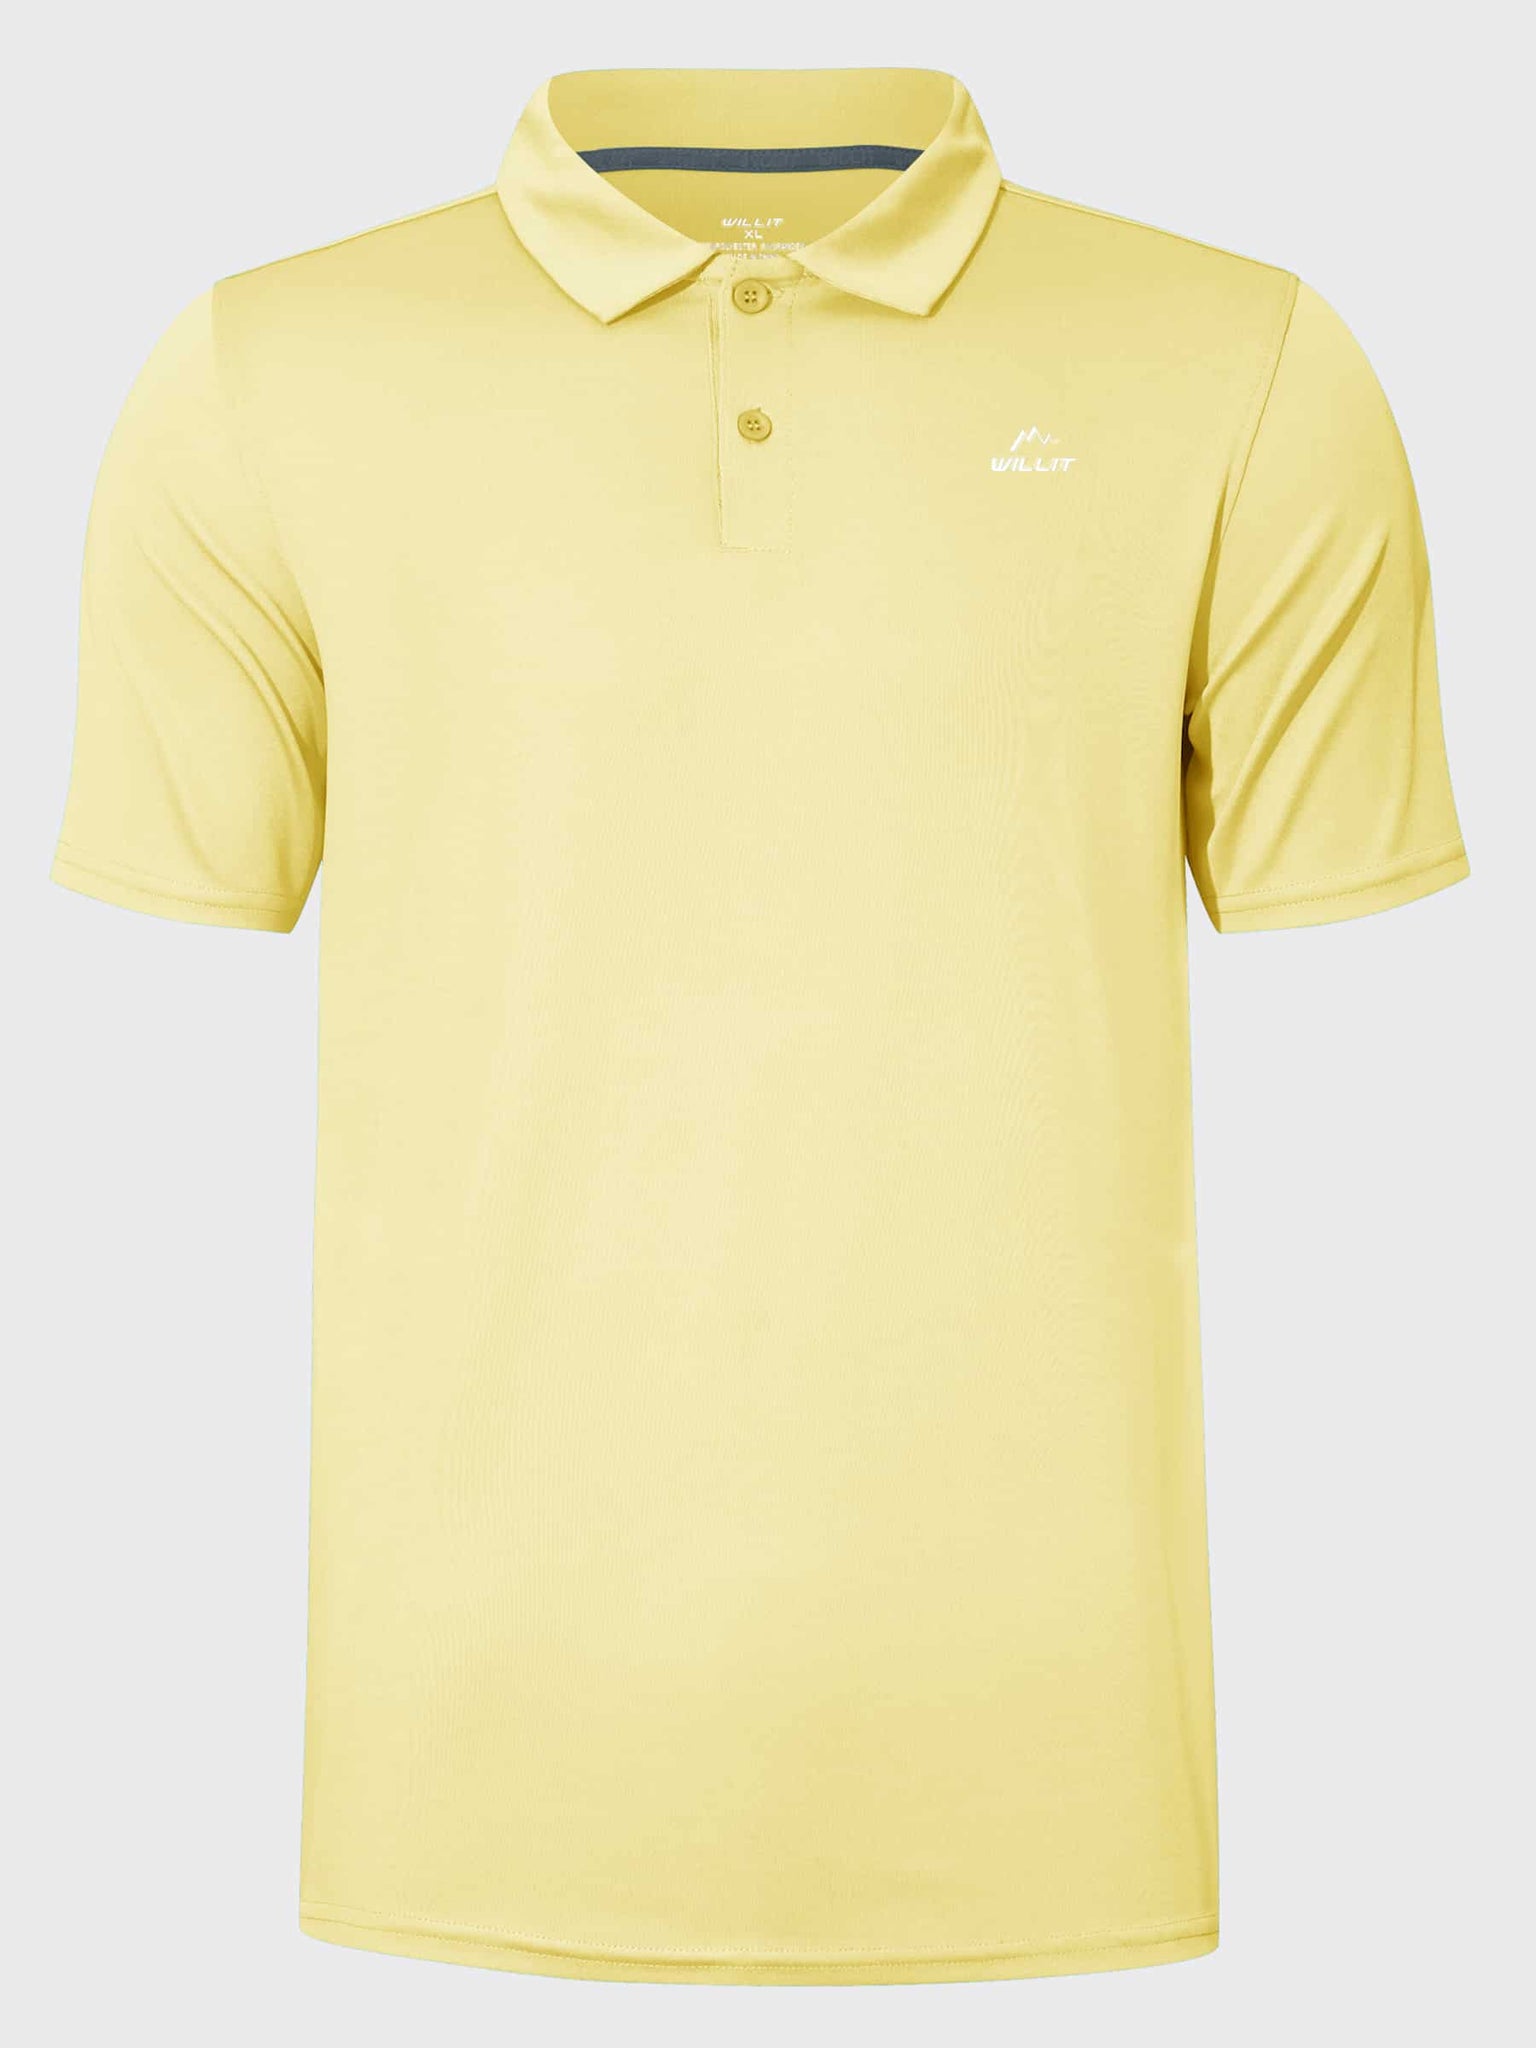 Youth Golf Polo Sun Shirts_Yellow_laydown2